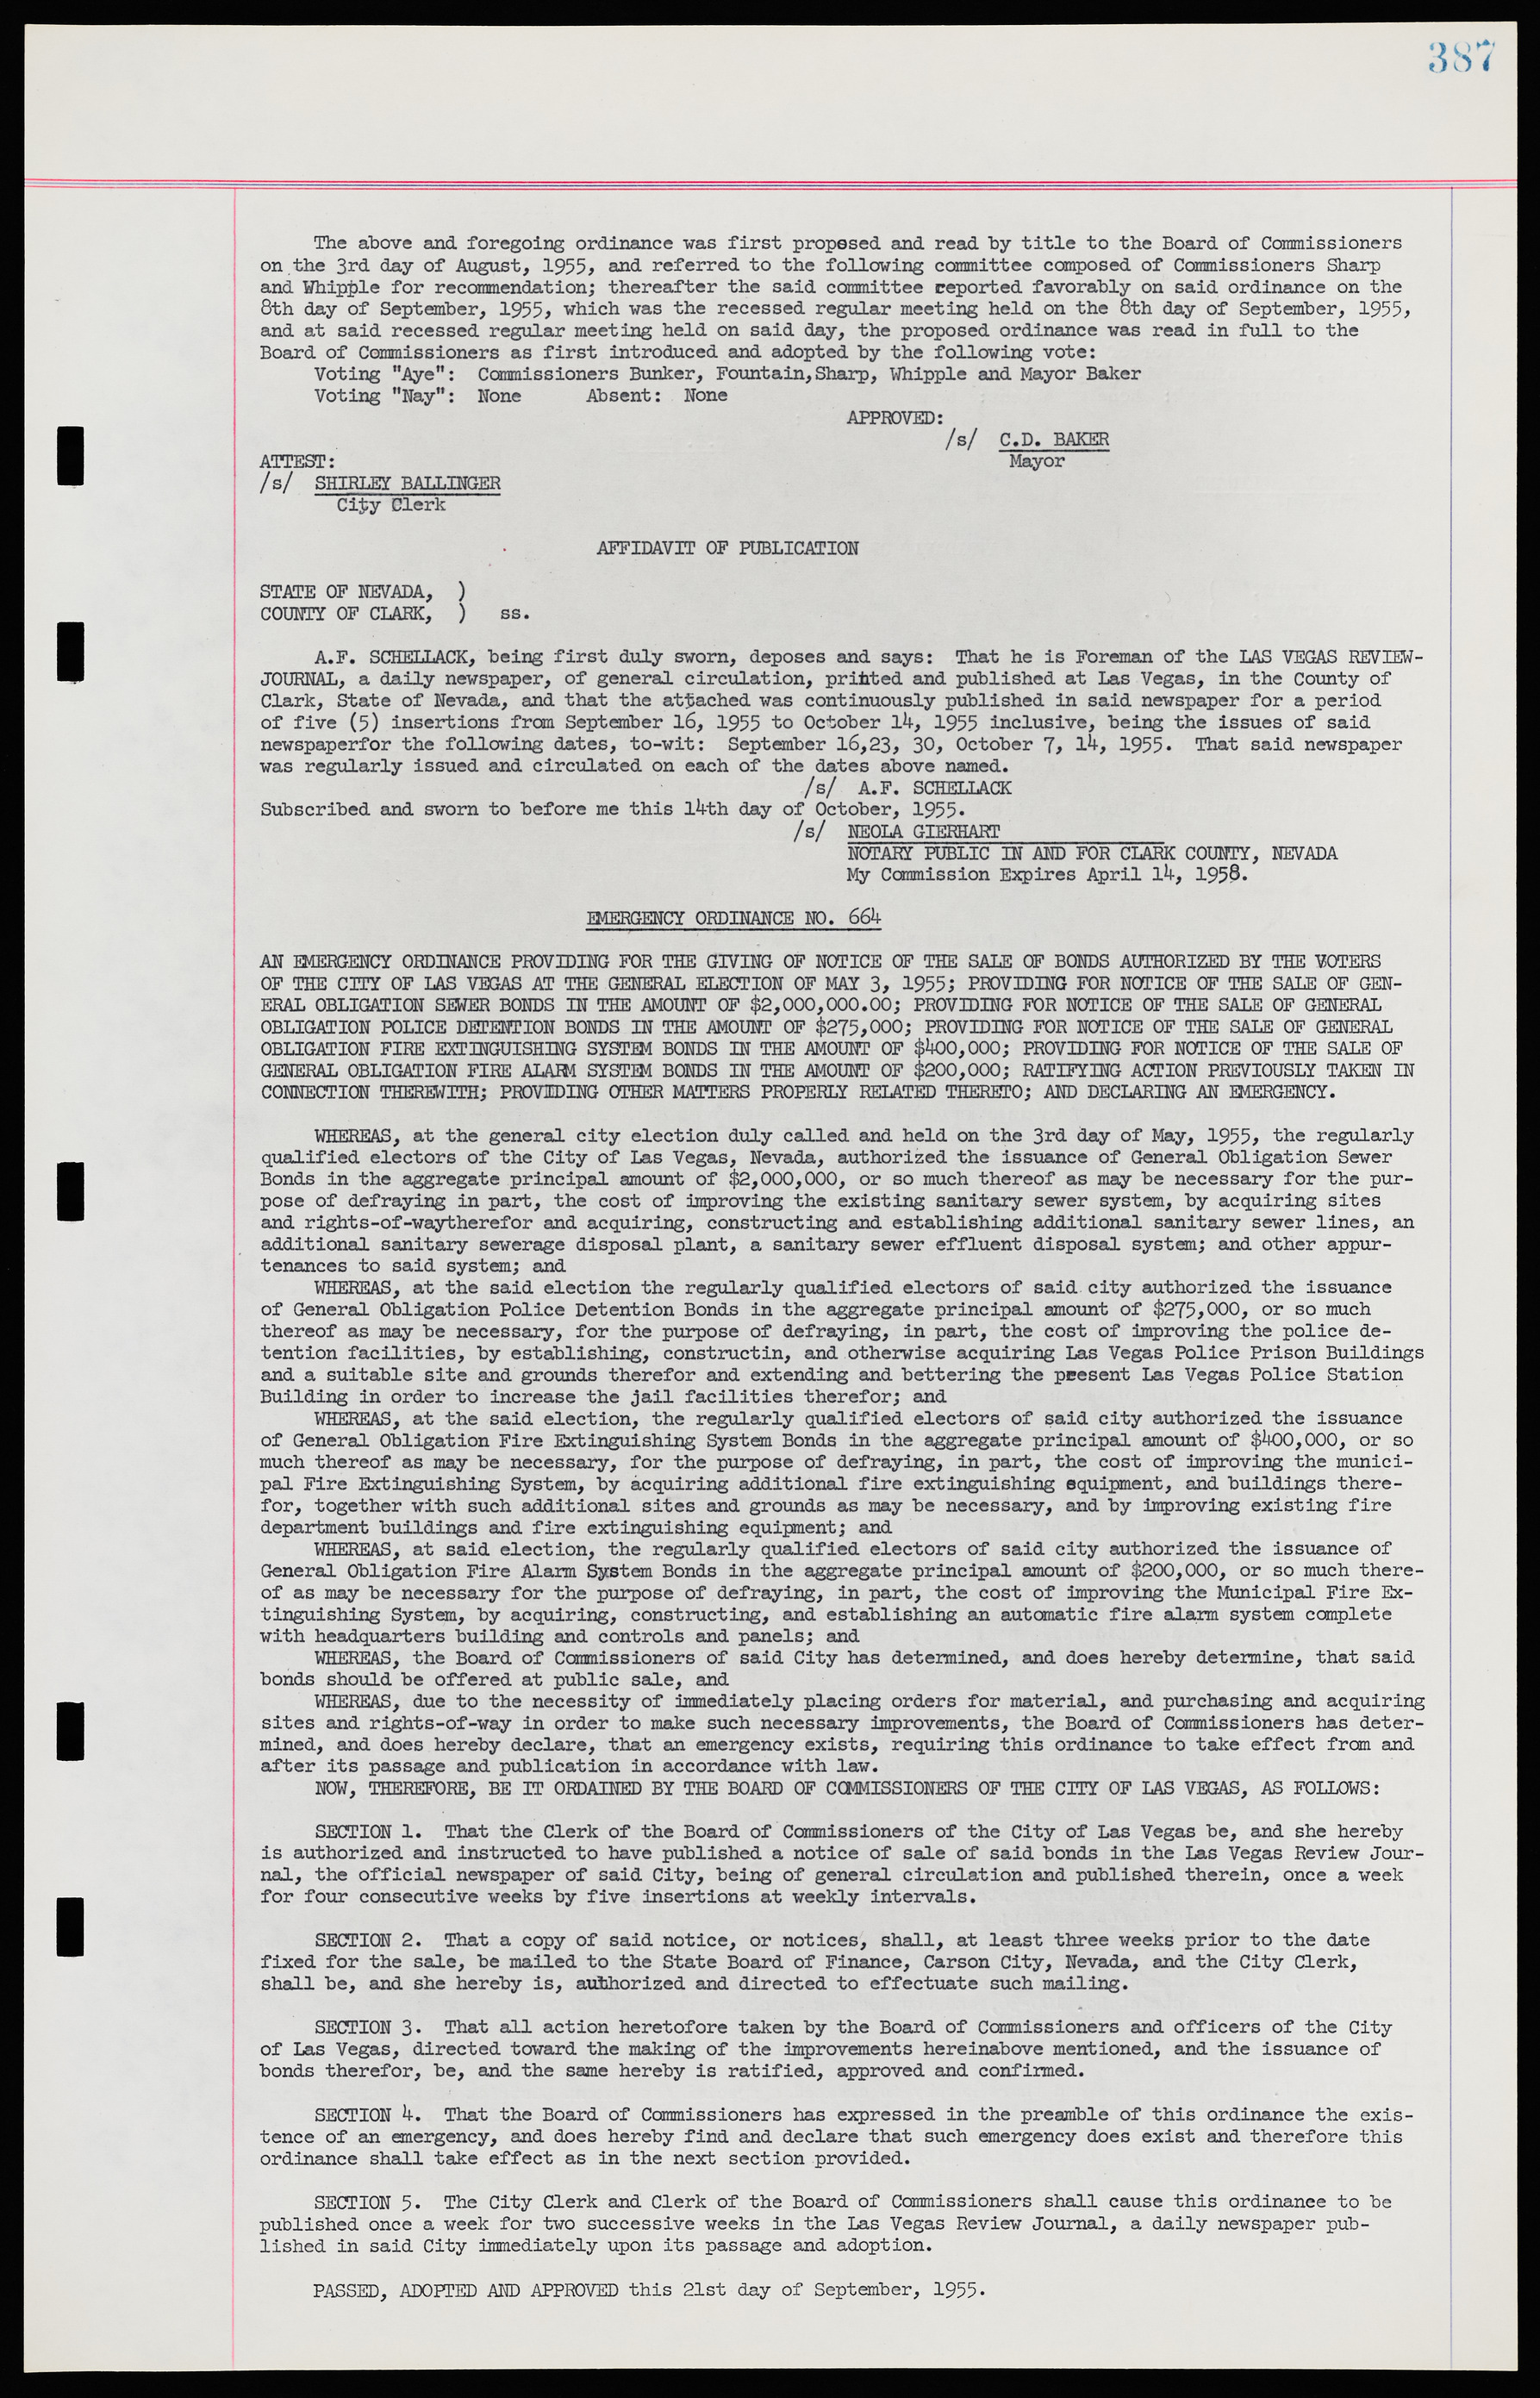 Las Vegas City Ordinances, November 13, 1950 to August 6, 1958, lvc000015-395